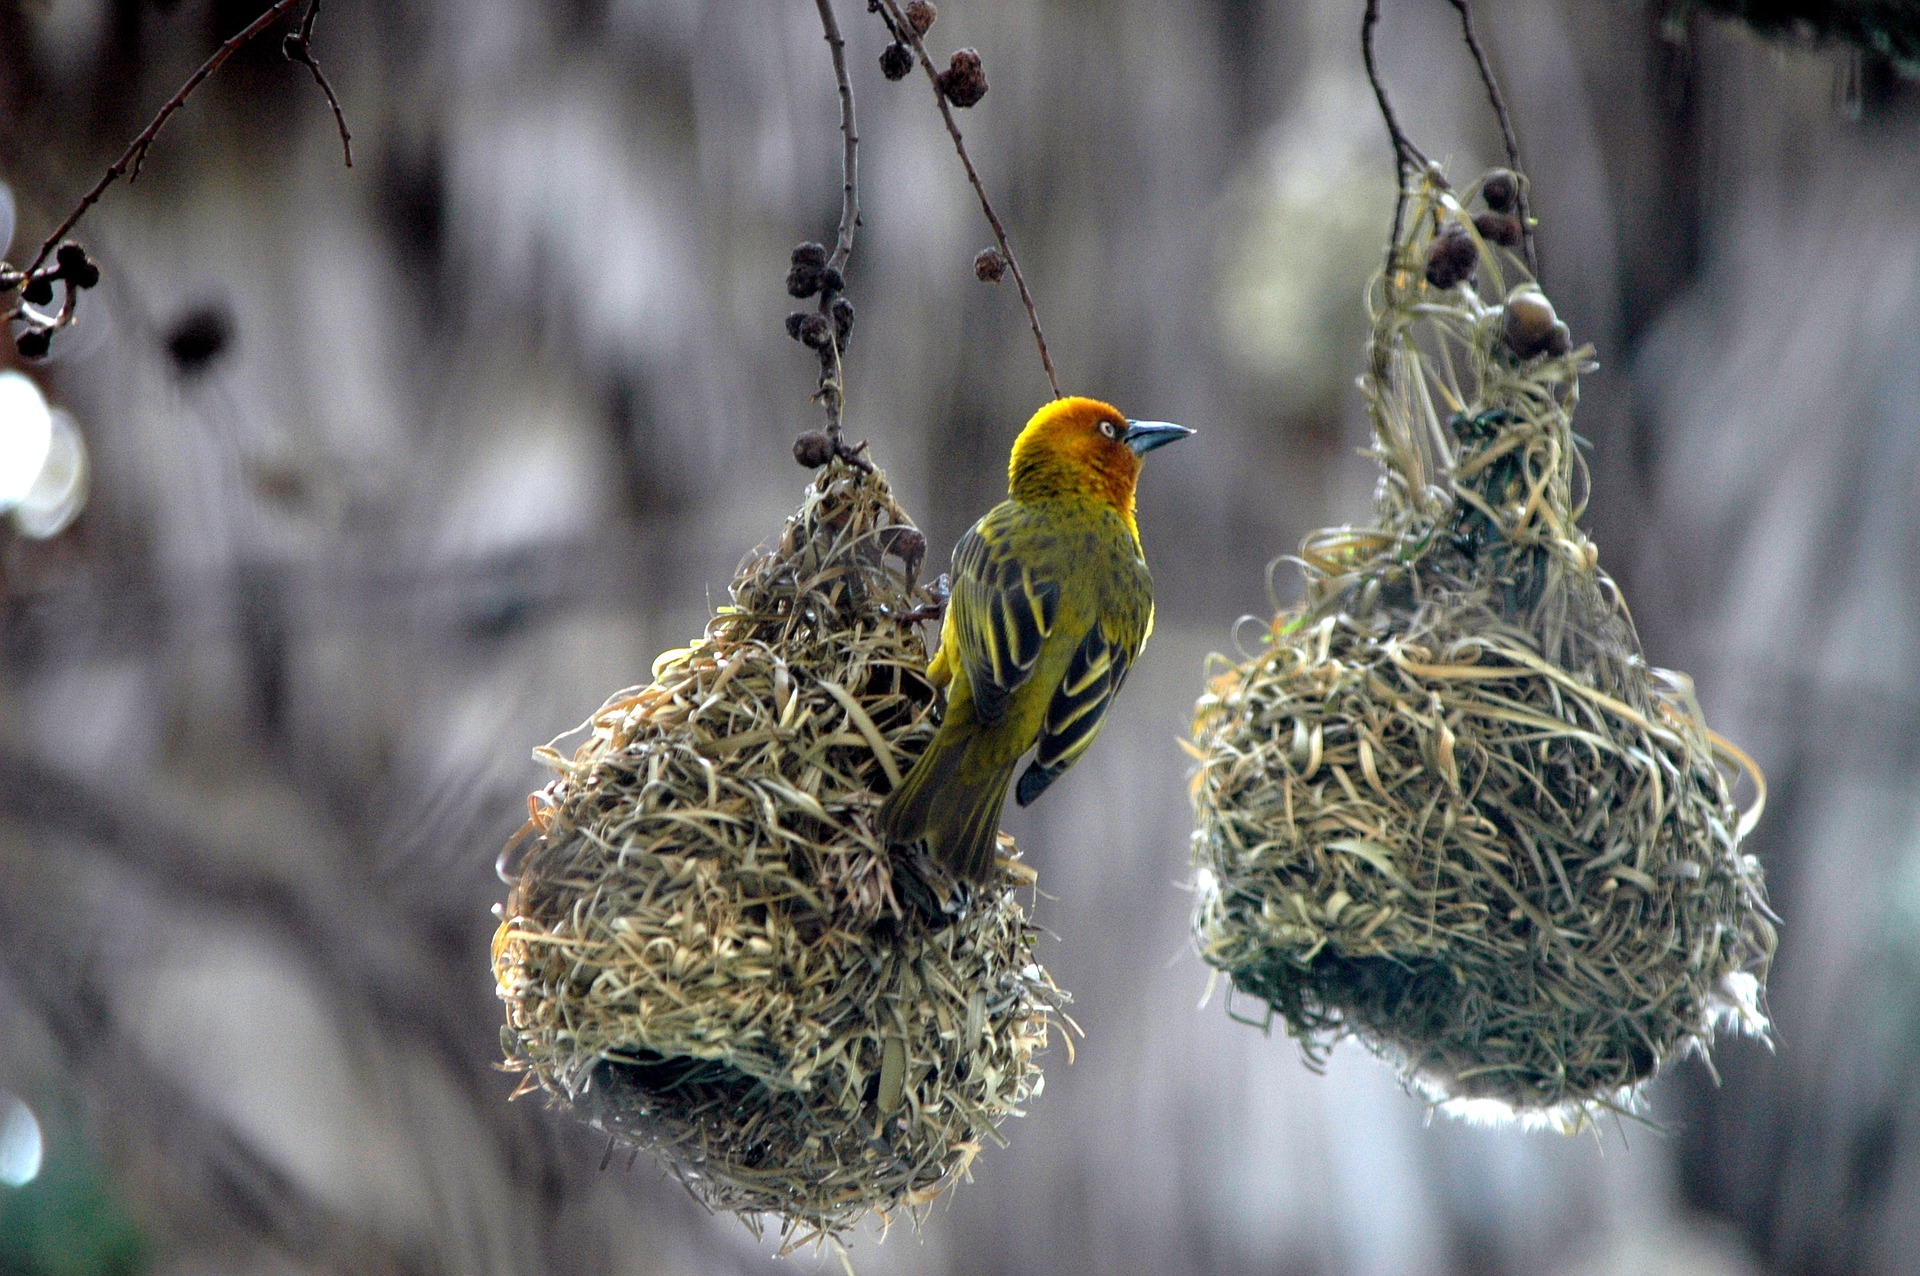 birds-nests-1700027_1920 (1).jpg